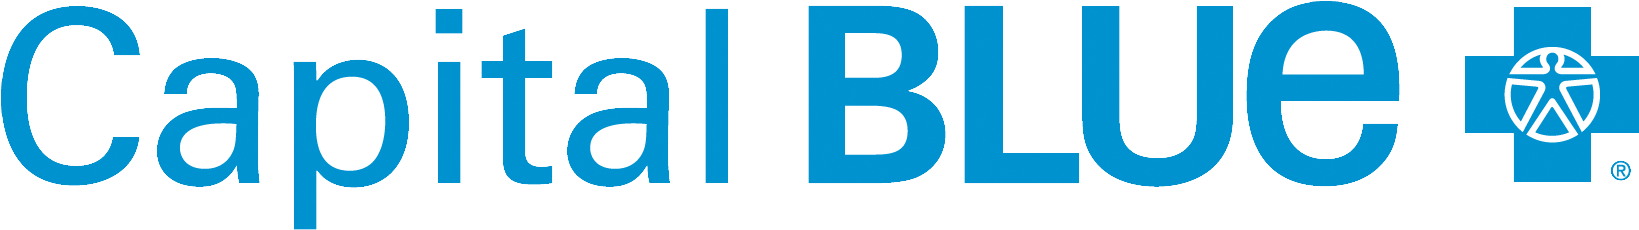 Ppl Electric Utilities Air Products Bb&t Capital Blue - Capital Blue Cross Blue Shield Logo (1750x244)